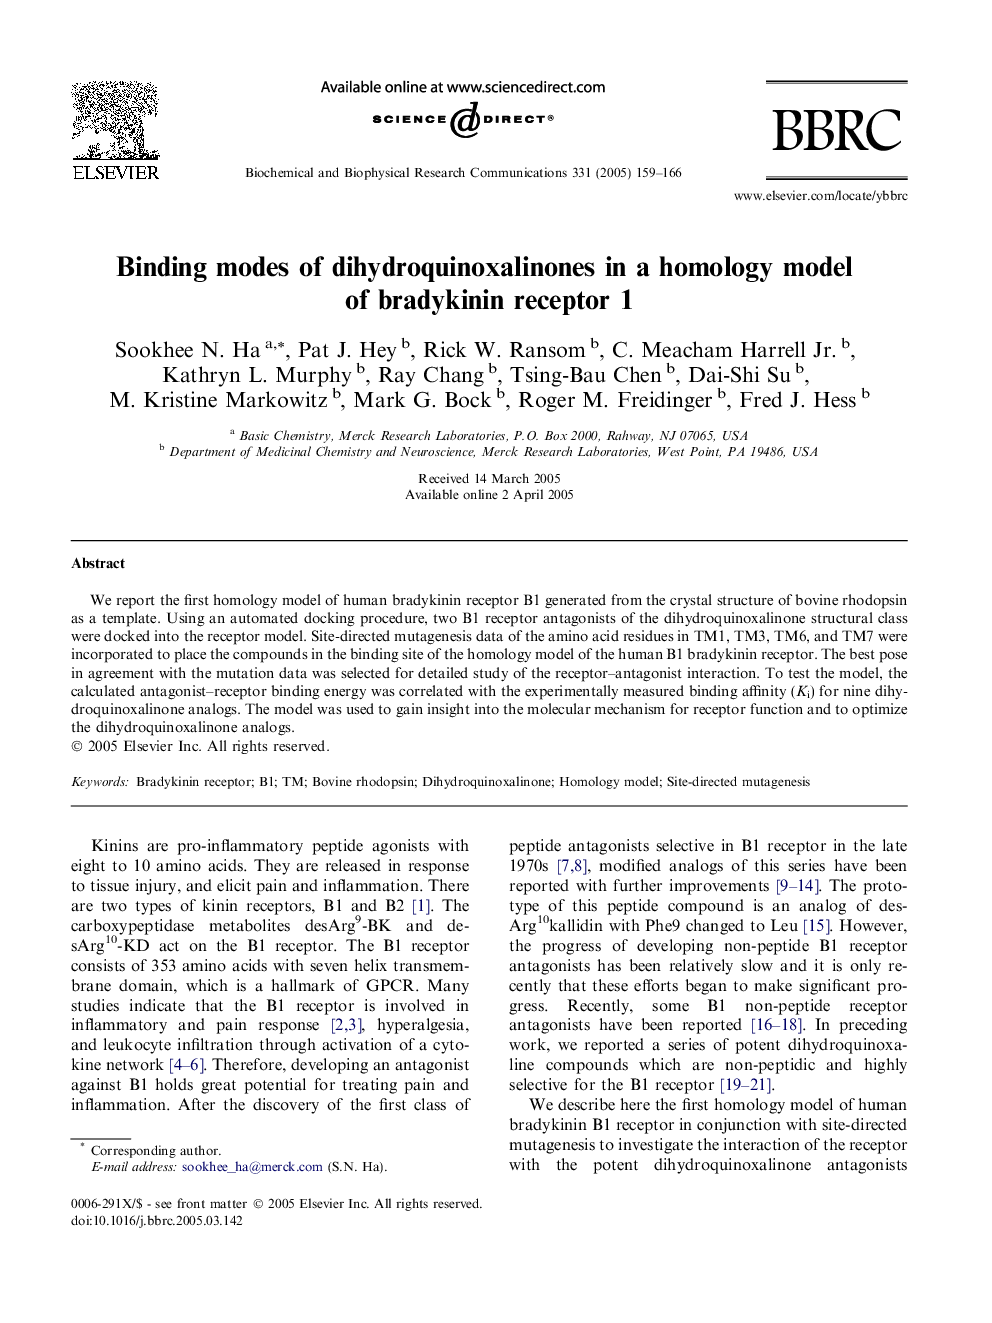 Binding modes of dihydroquinoxalinones in a homology model of bradykinin receptor 1